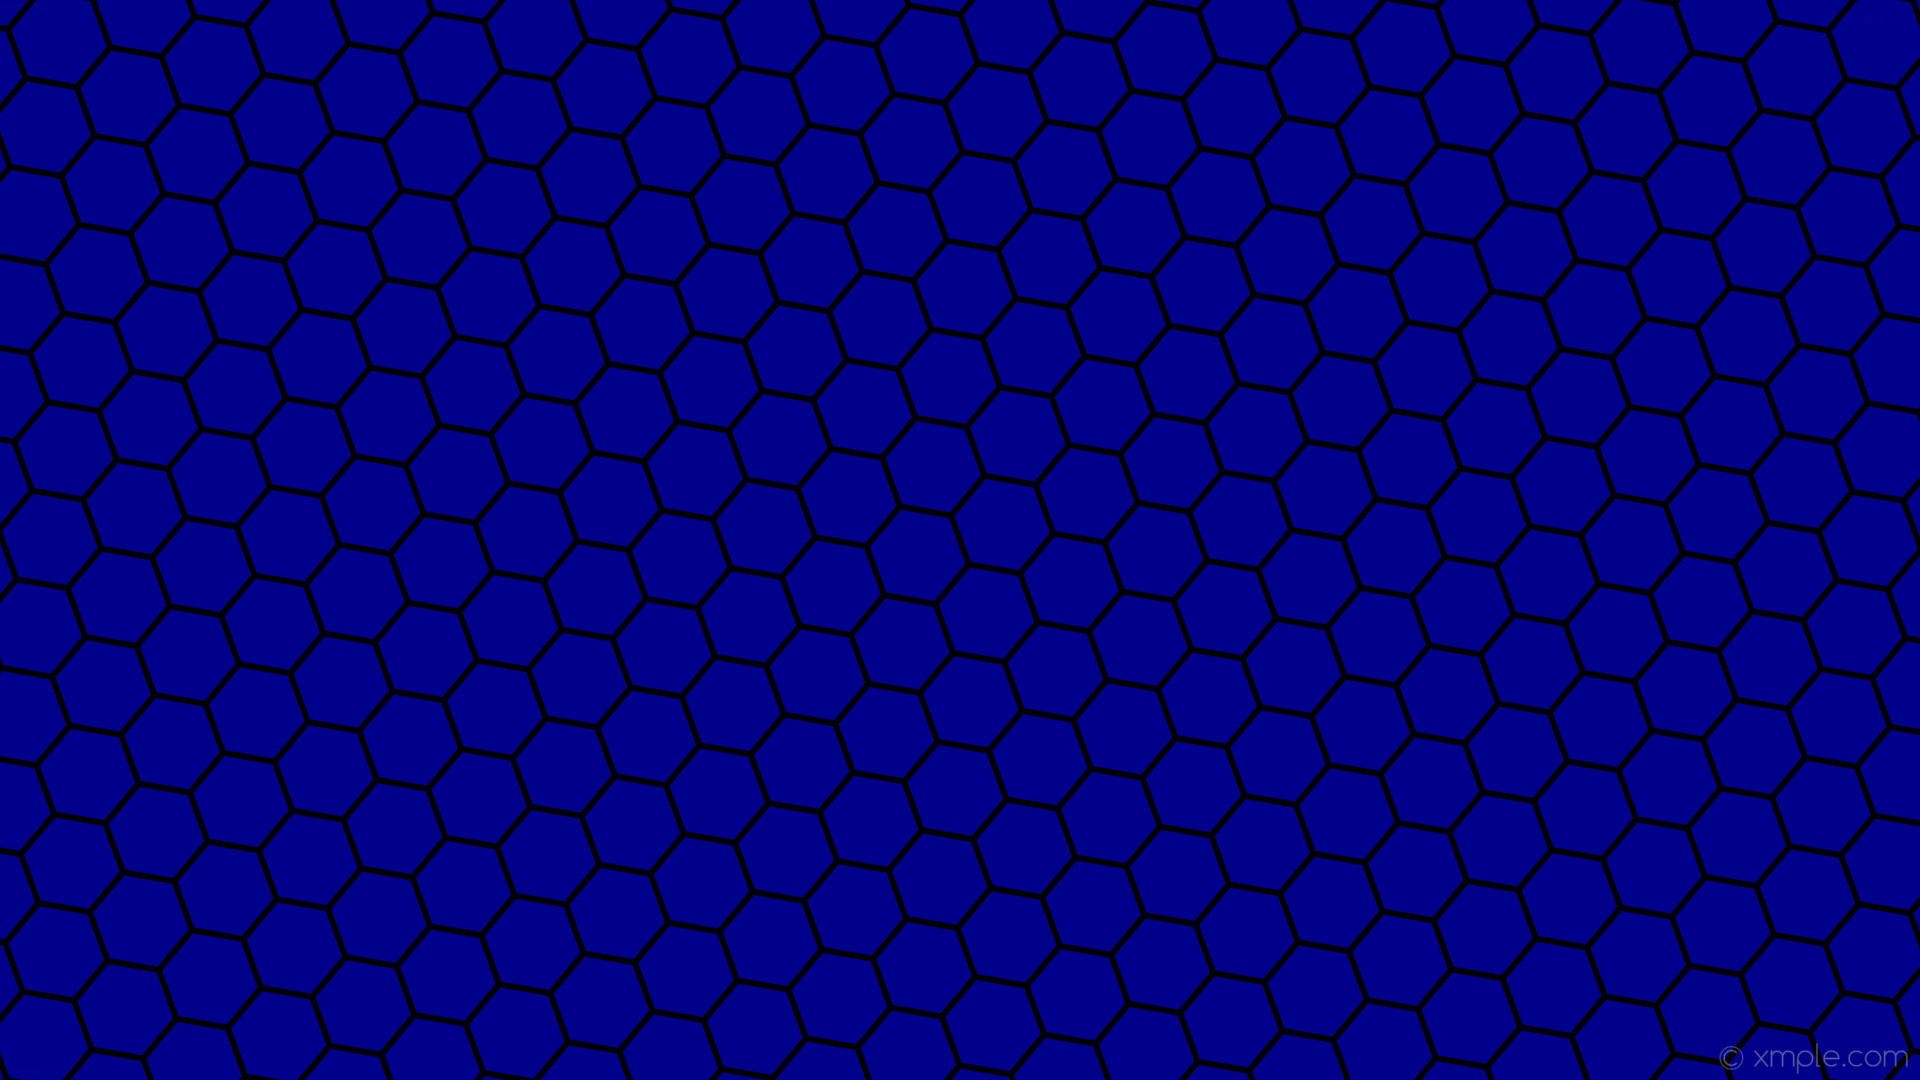 1920x1080 wallpaper beehive honeycomb blue hexagon black dark blue #00008b #000000  diagonal 20Â° 6px